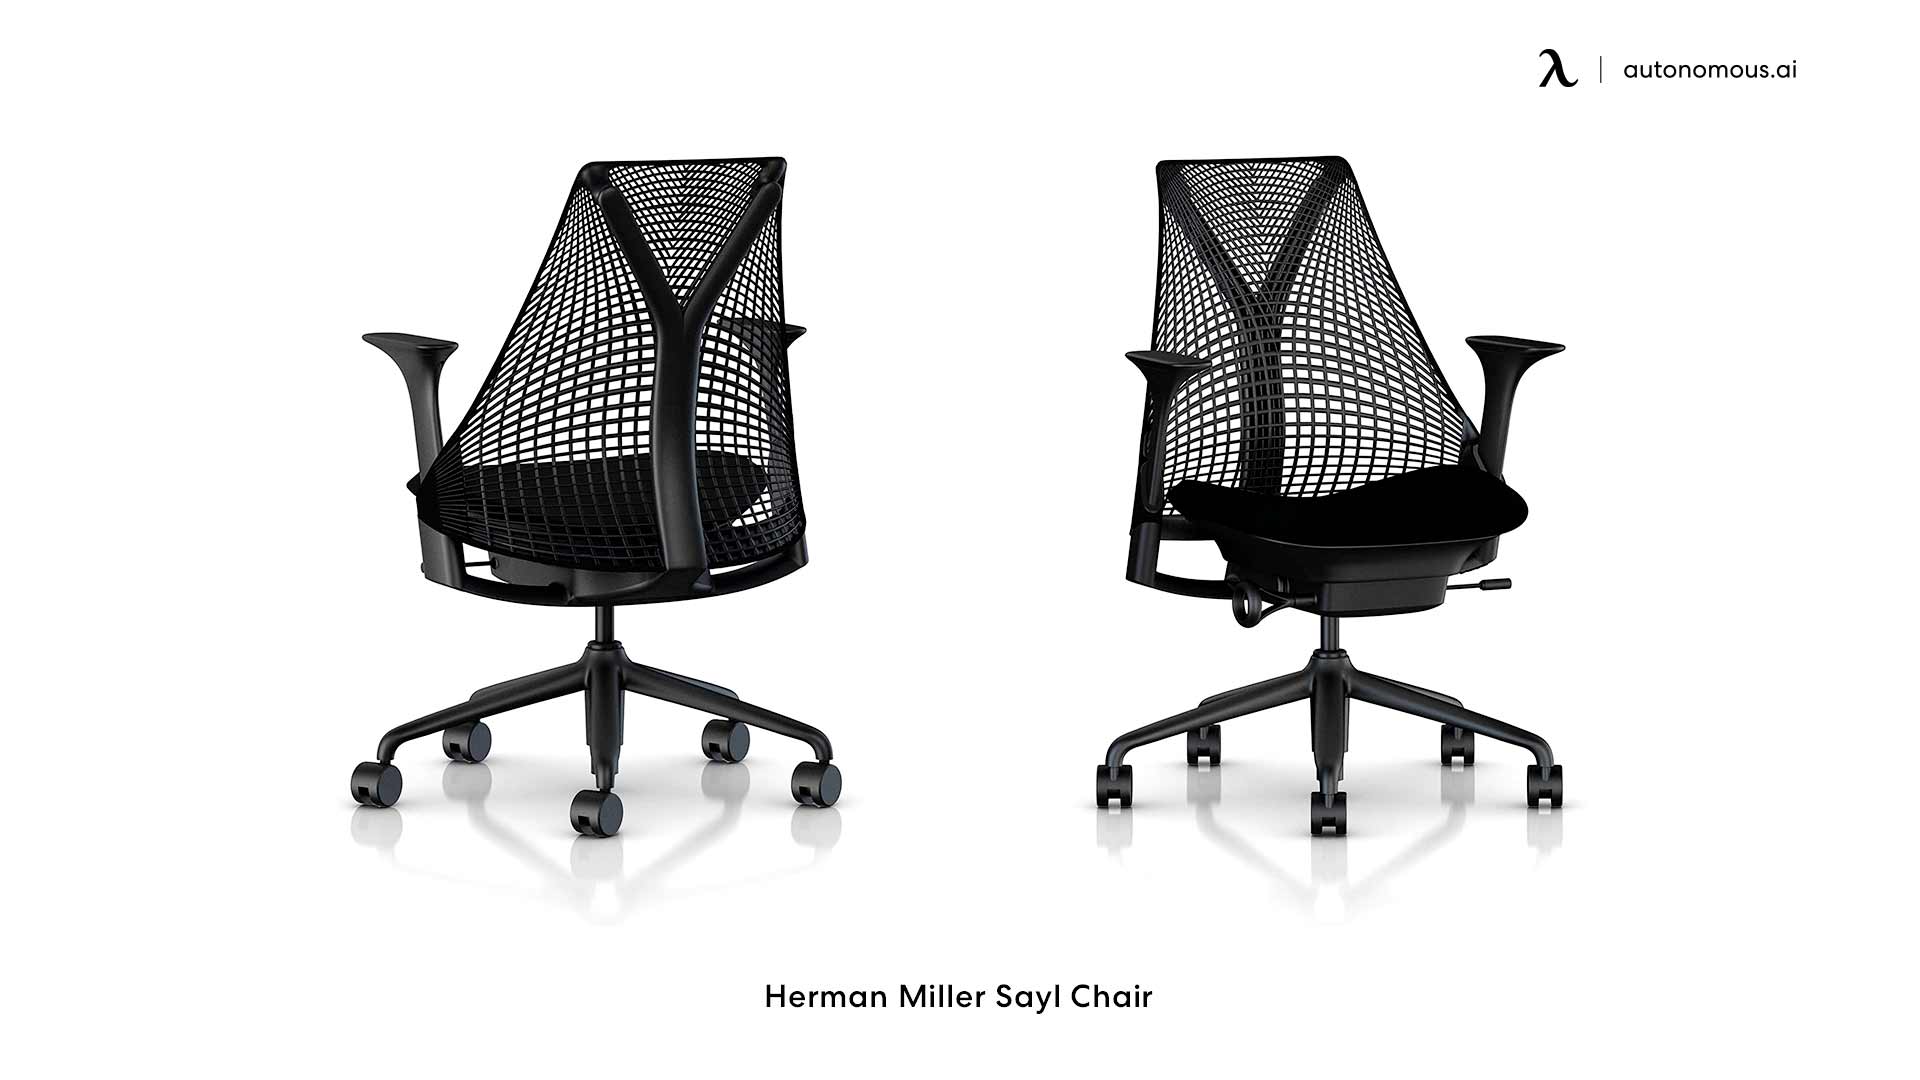 Herman M. Sayl-Ergonomic Office Chair